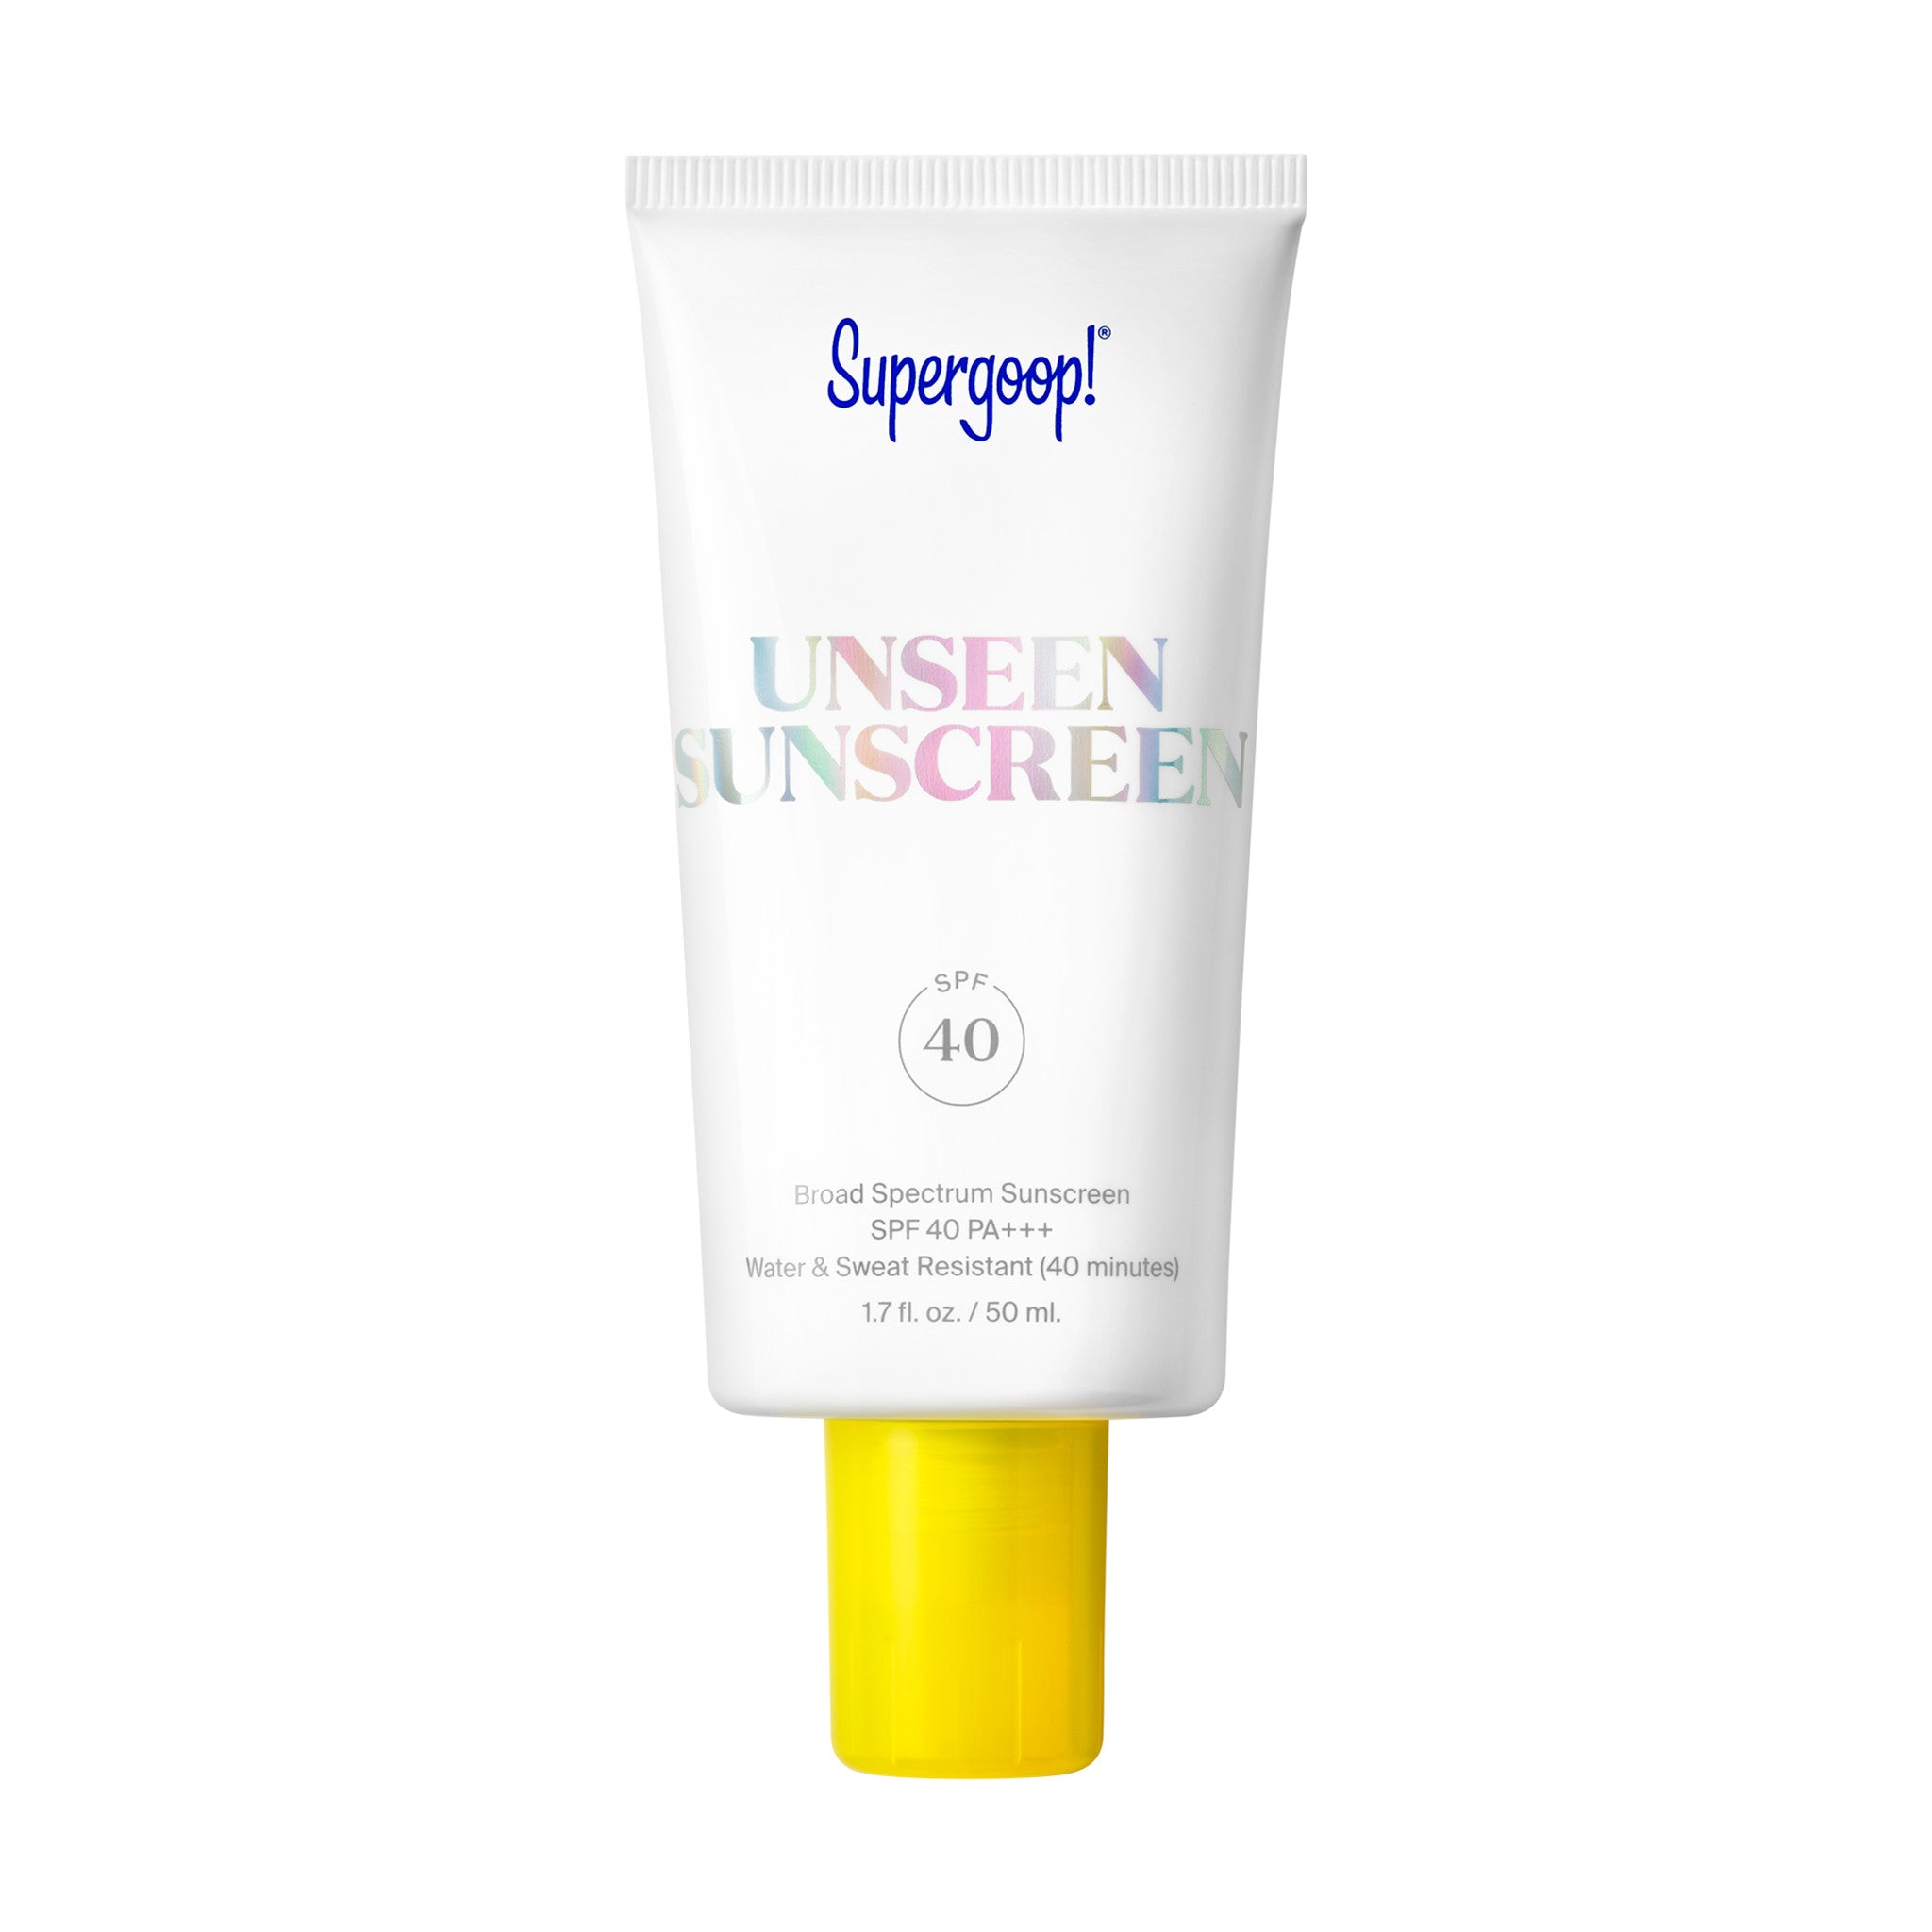 Supergoop! Unseen Sunscreen SPF 40 Size variant: 1.7 fl oz | 50 ml main image.